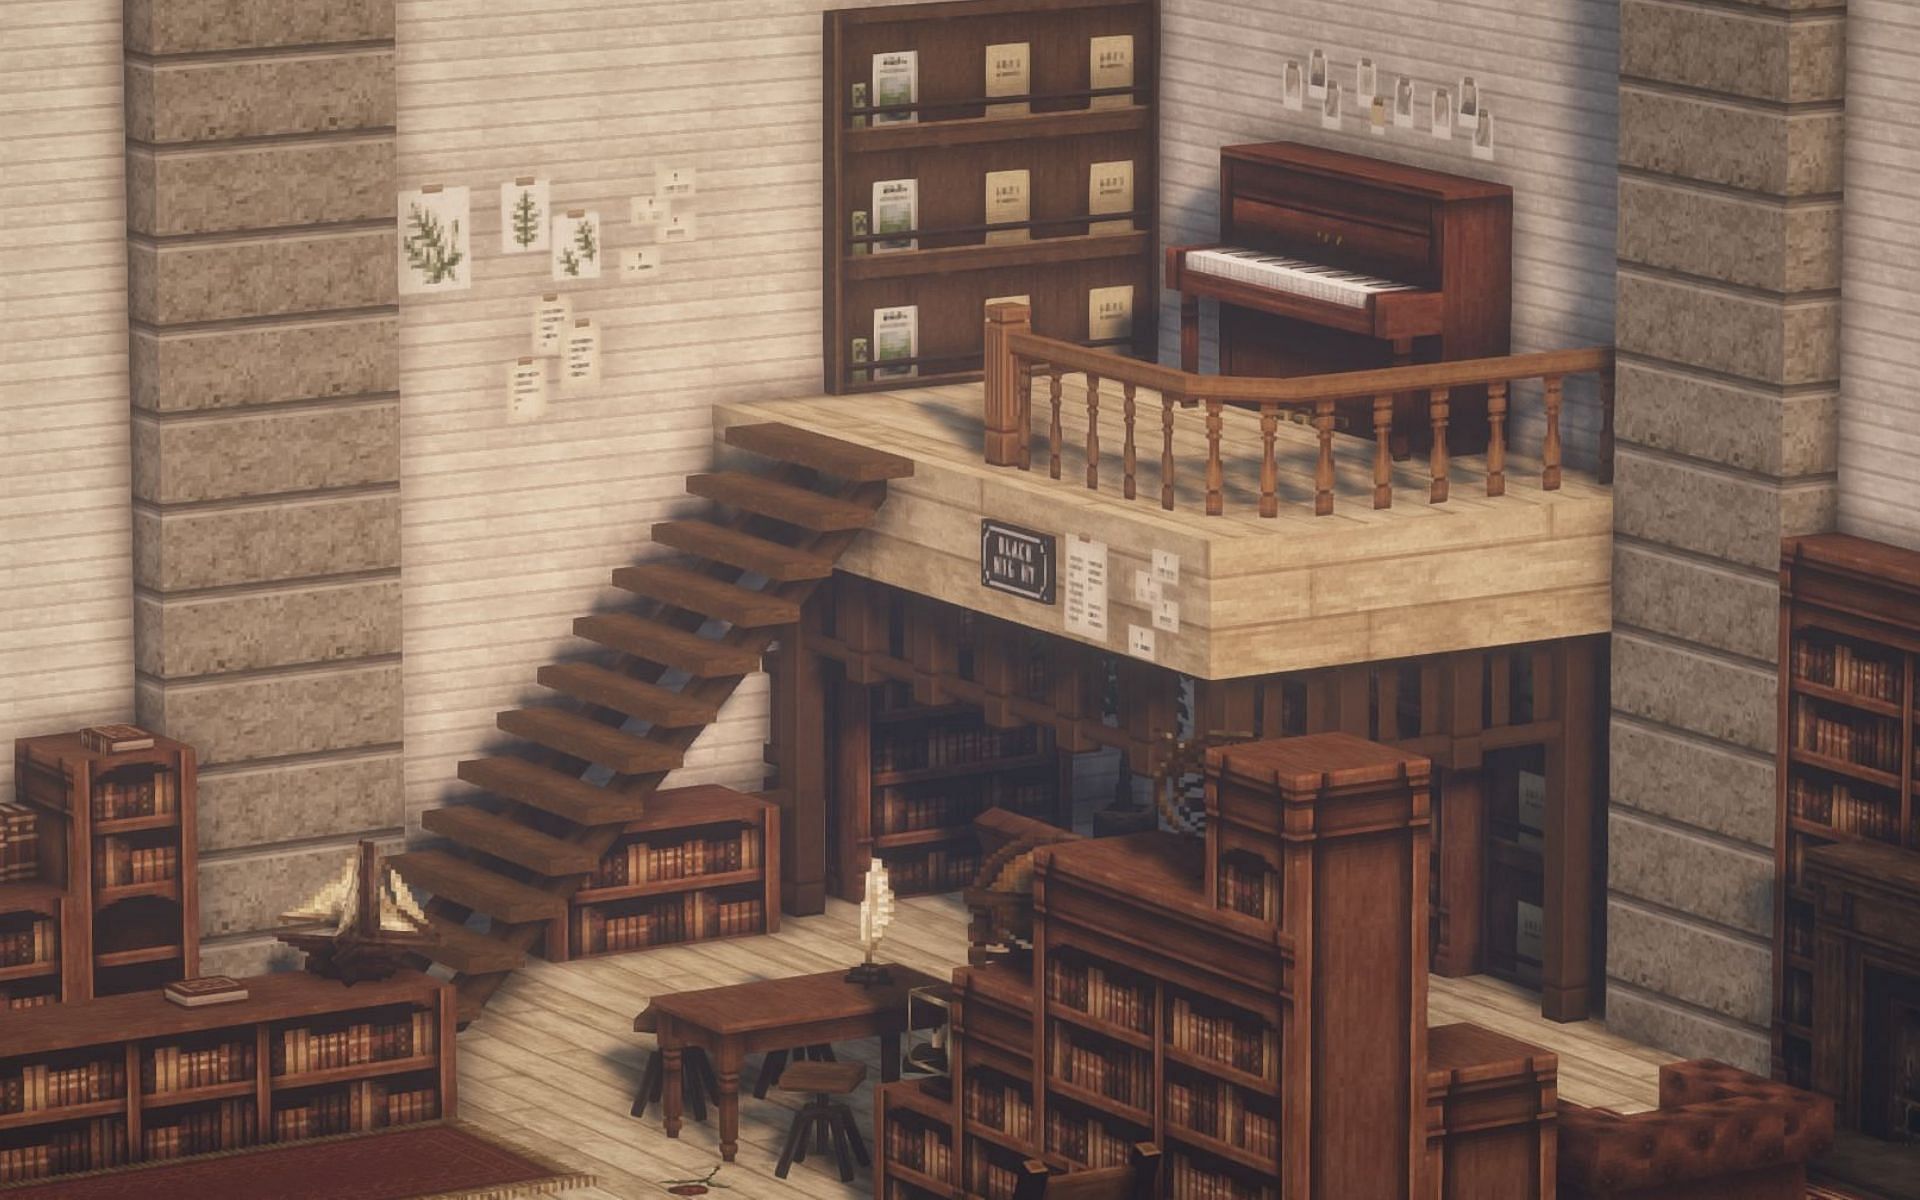 Vintage library interior in Minecraft (Image via u/slblu Reddit)